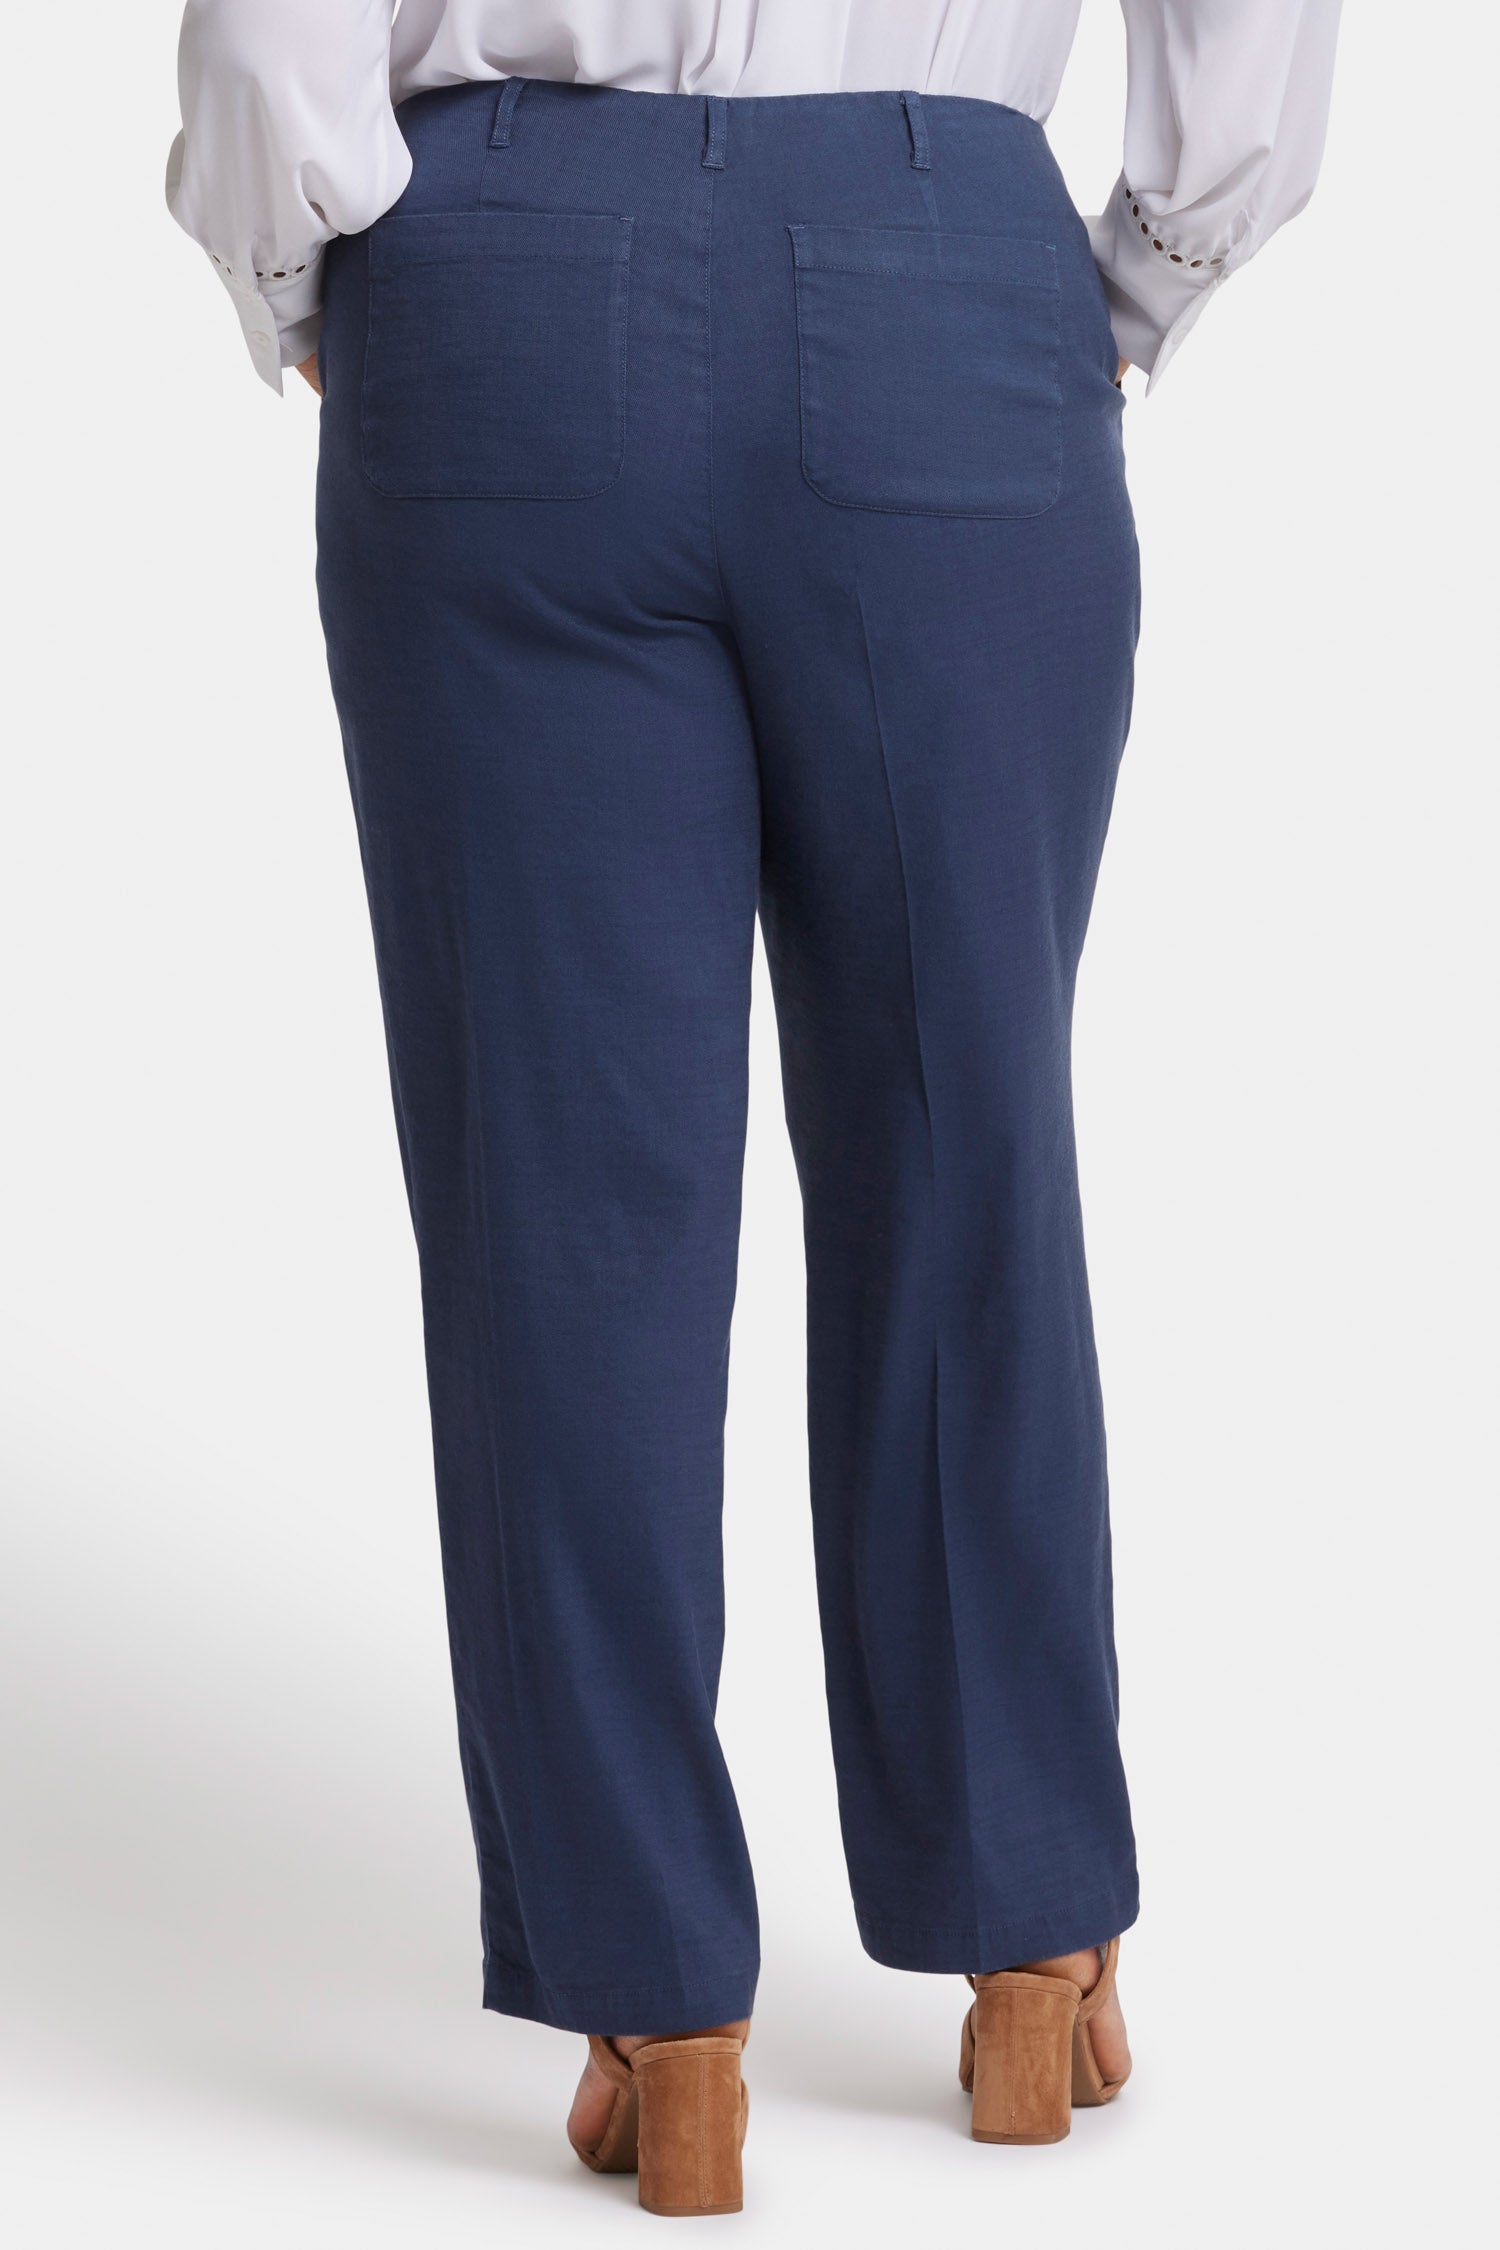 Plus Size Stretchy Capri Pants-5002BN-AXS1 – Jostar Online